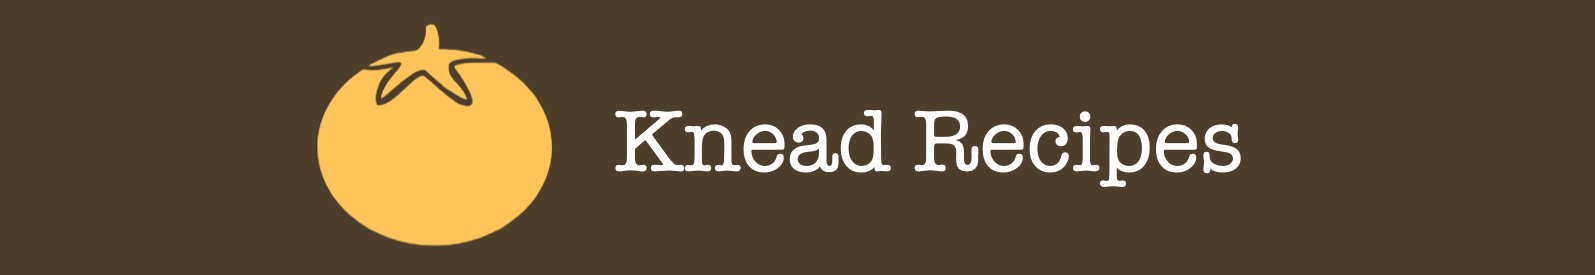 Knead Recipes Logo